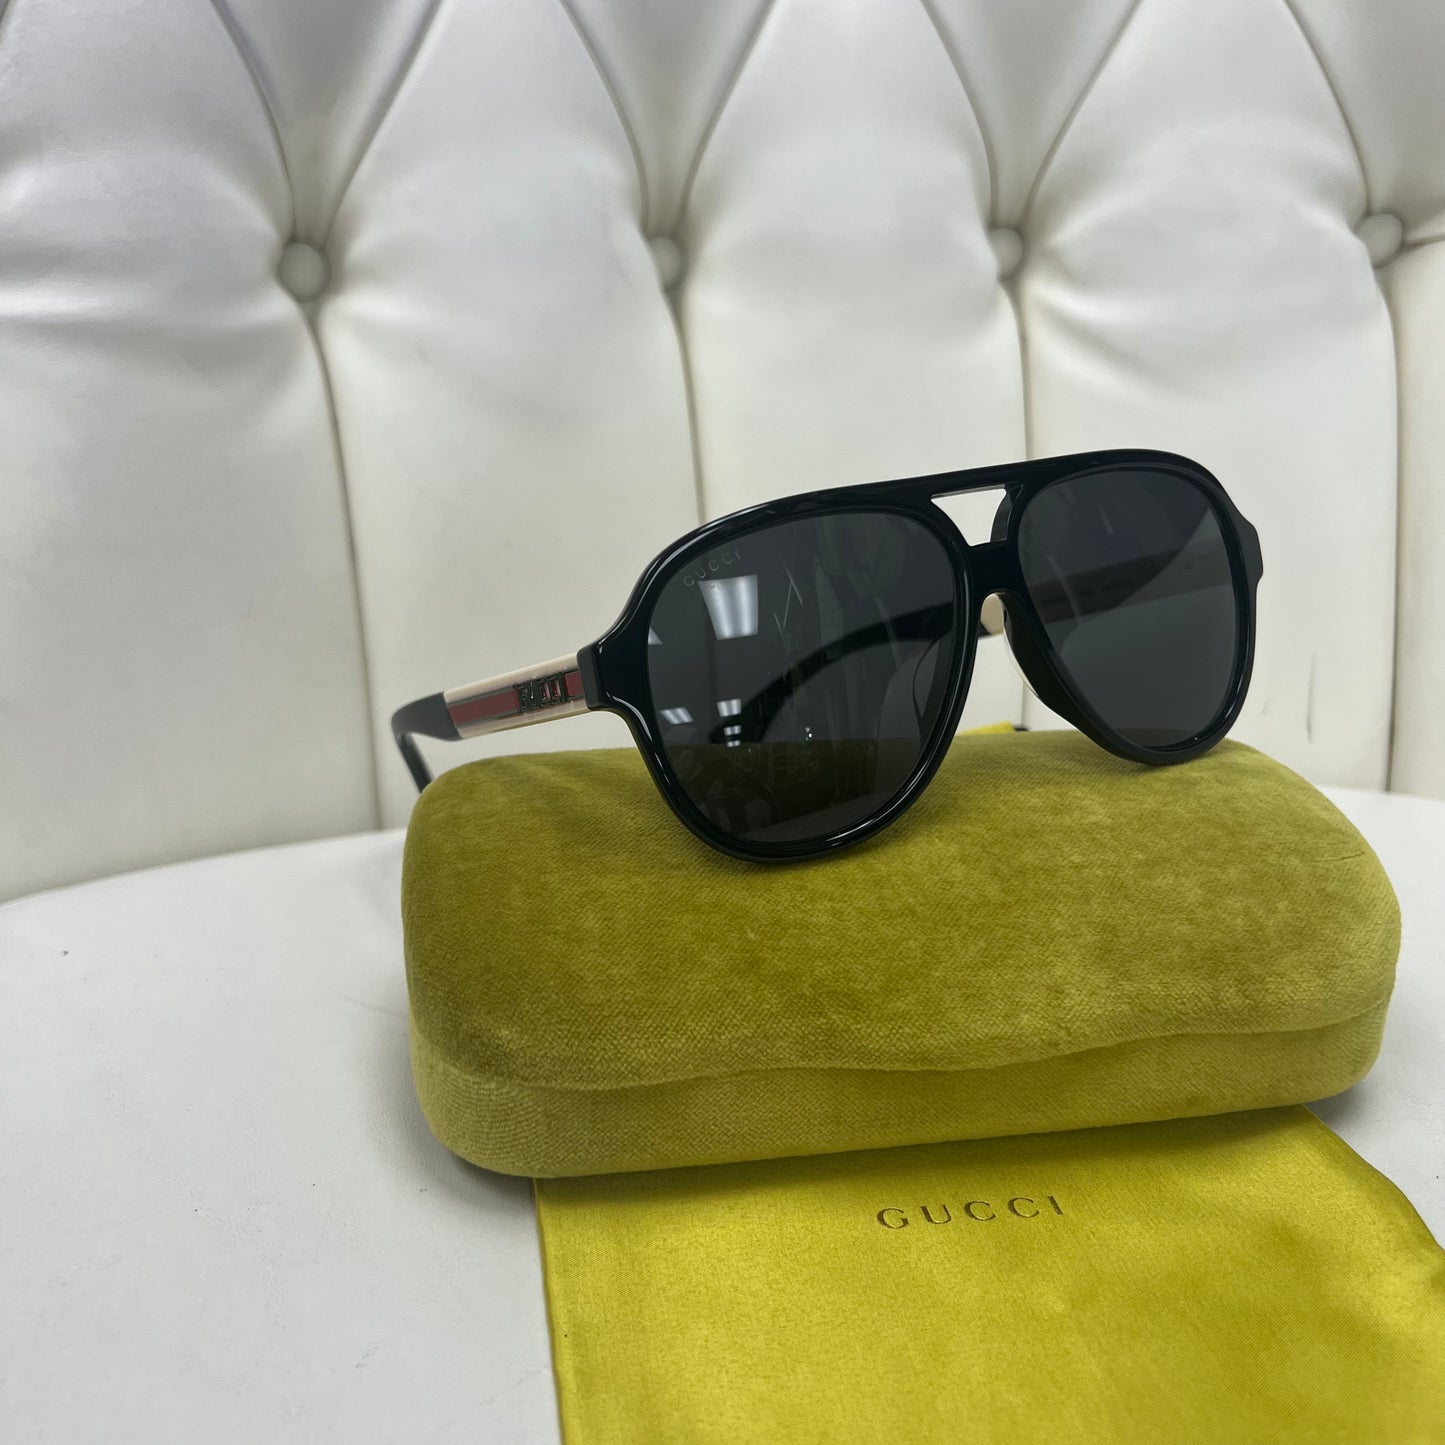 Gucci Navigator Black Sunglasses